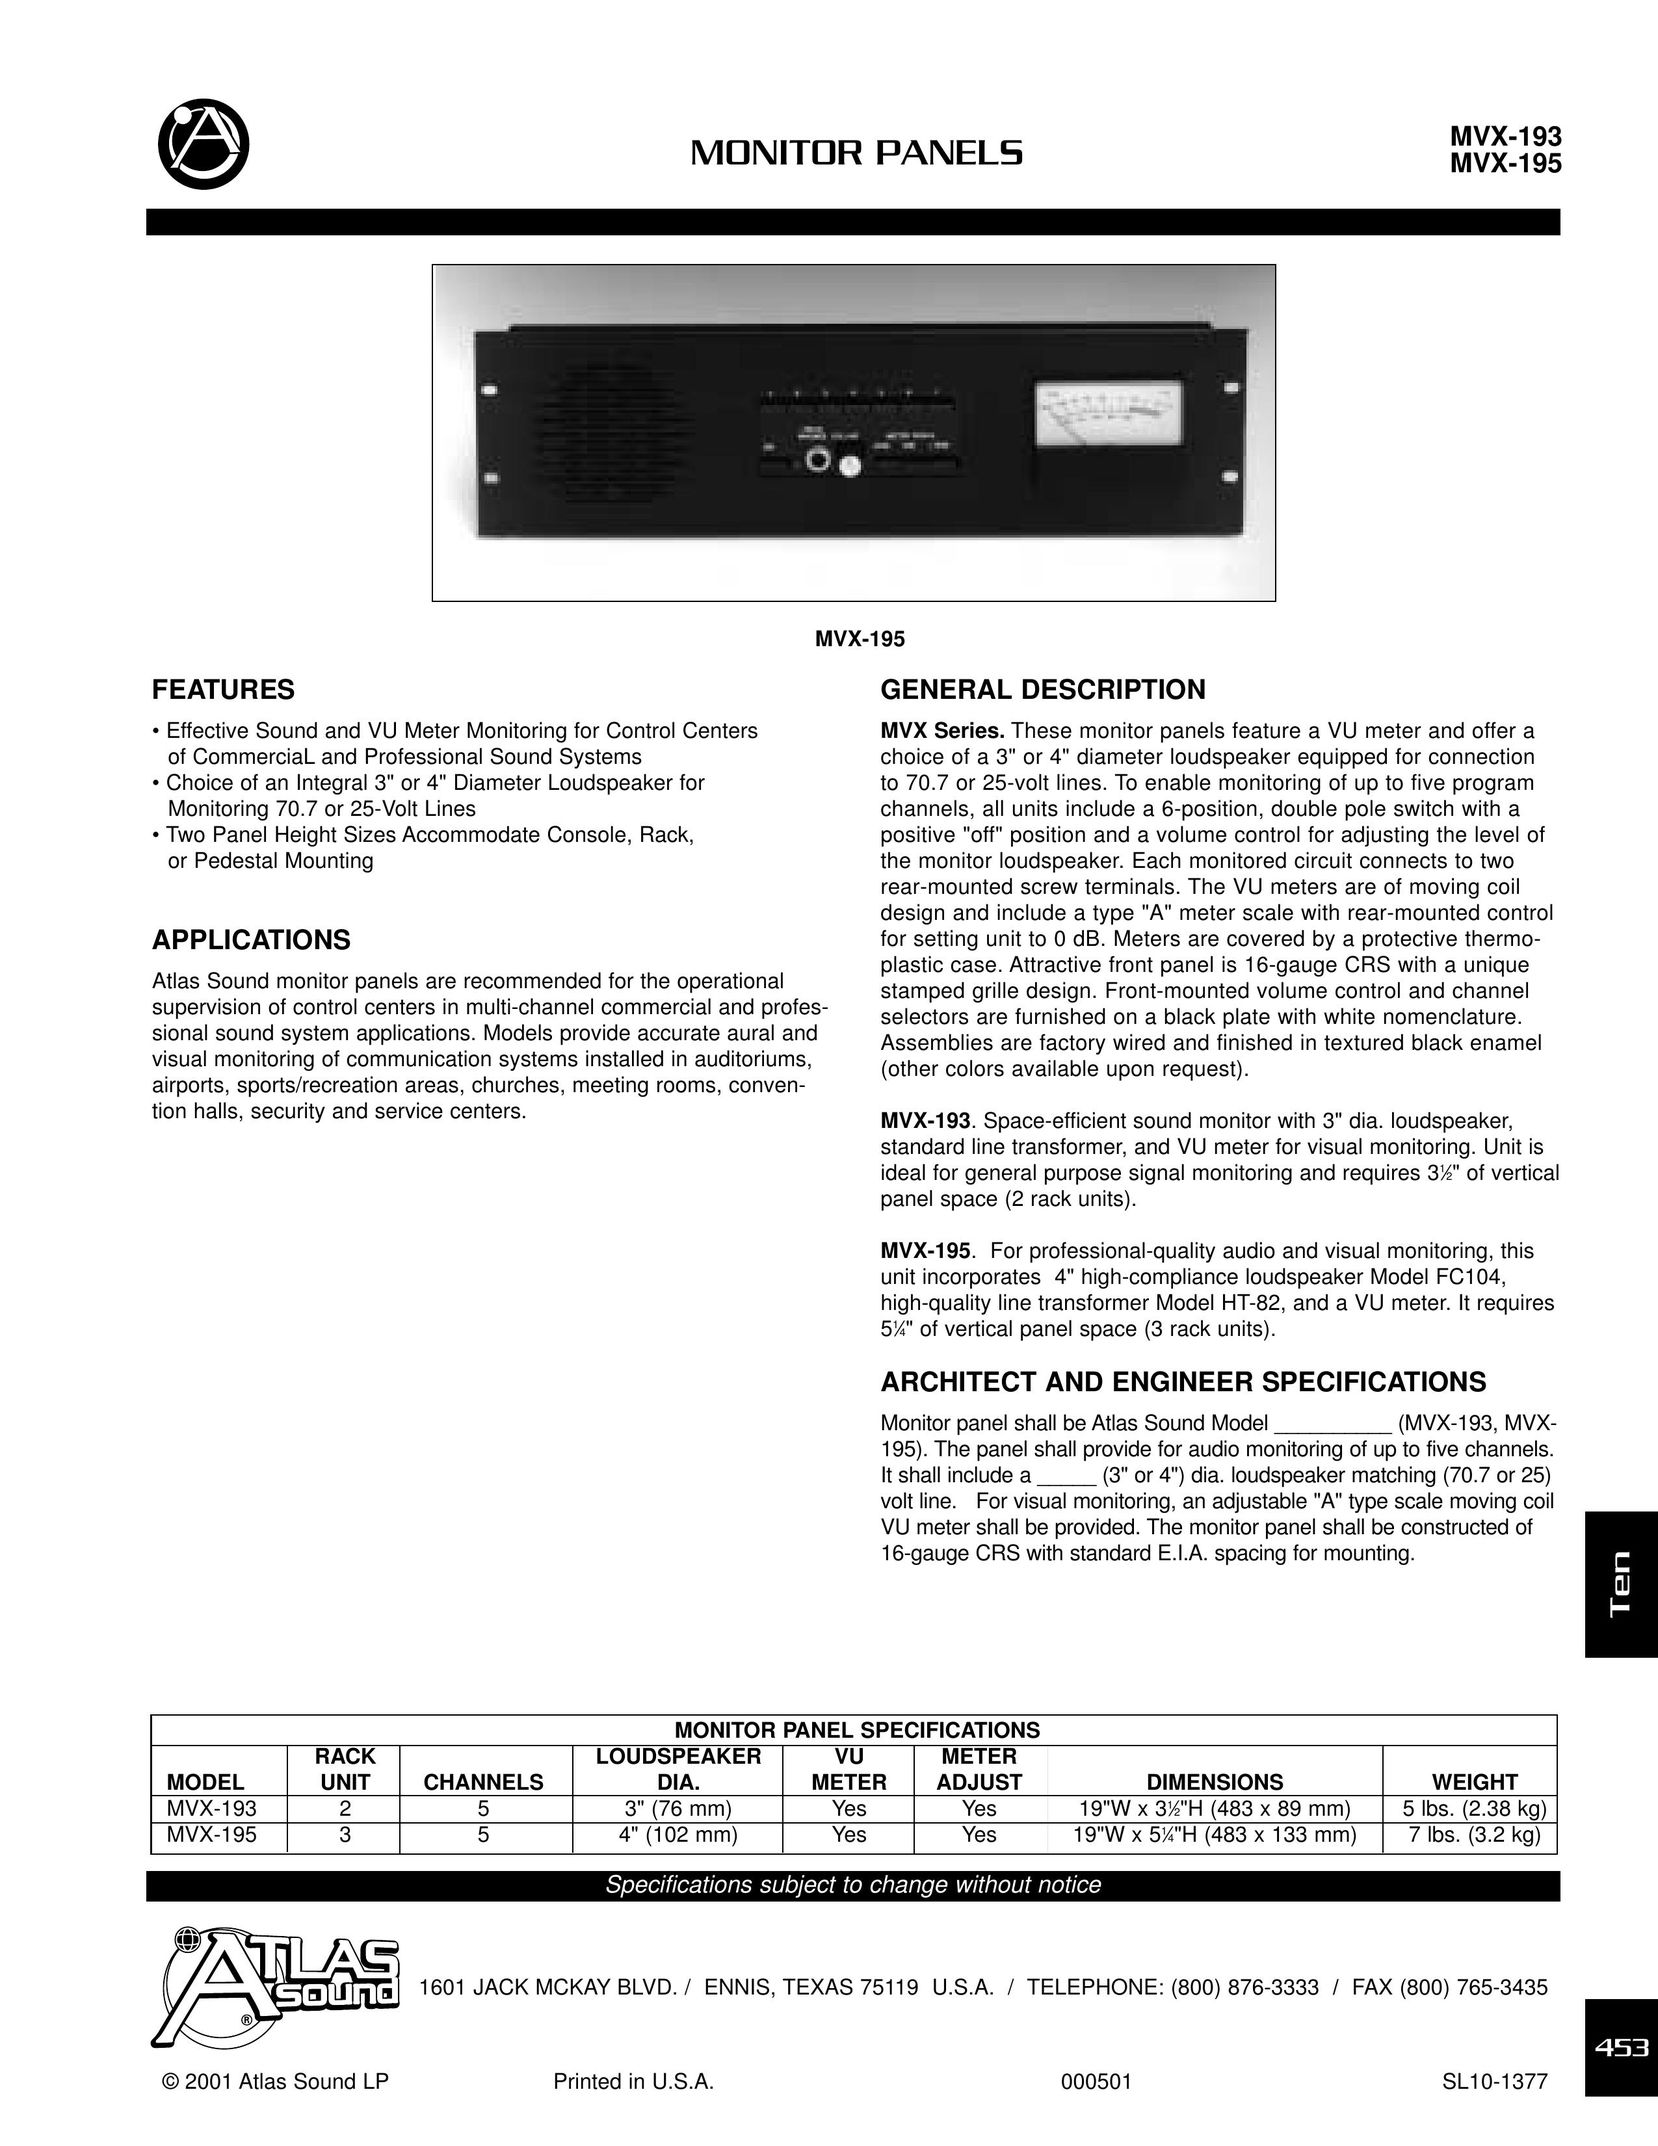 Atlas Sound MVX-193 Switch User Manual